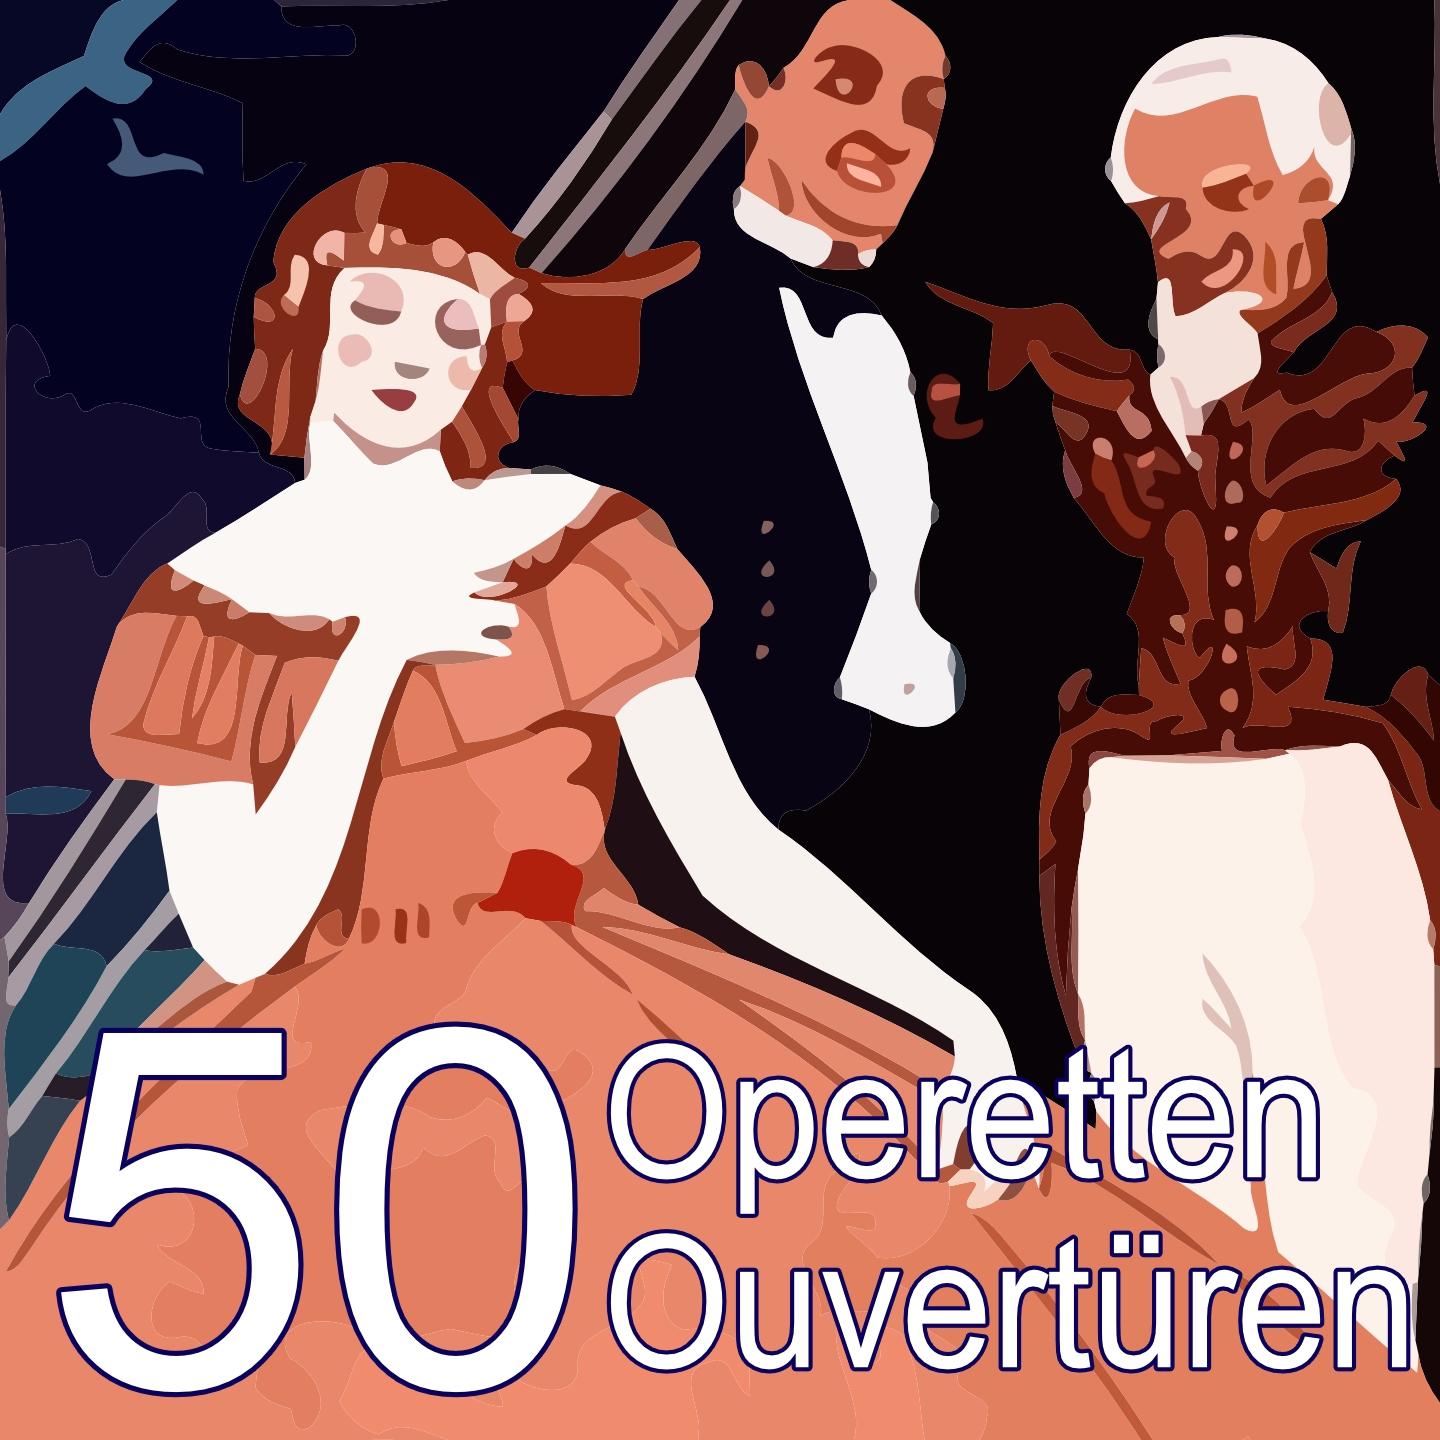 50 Operetten Ouvertü ren